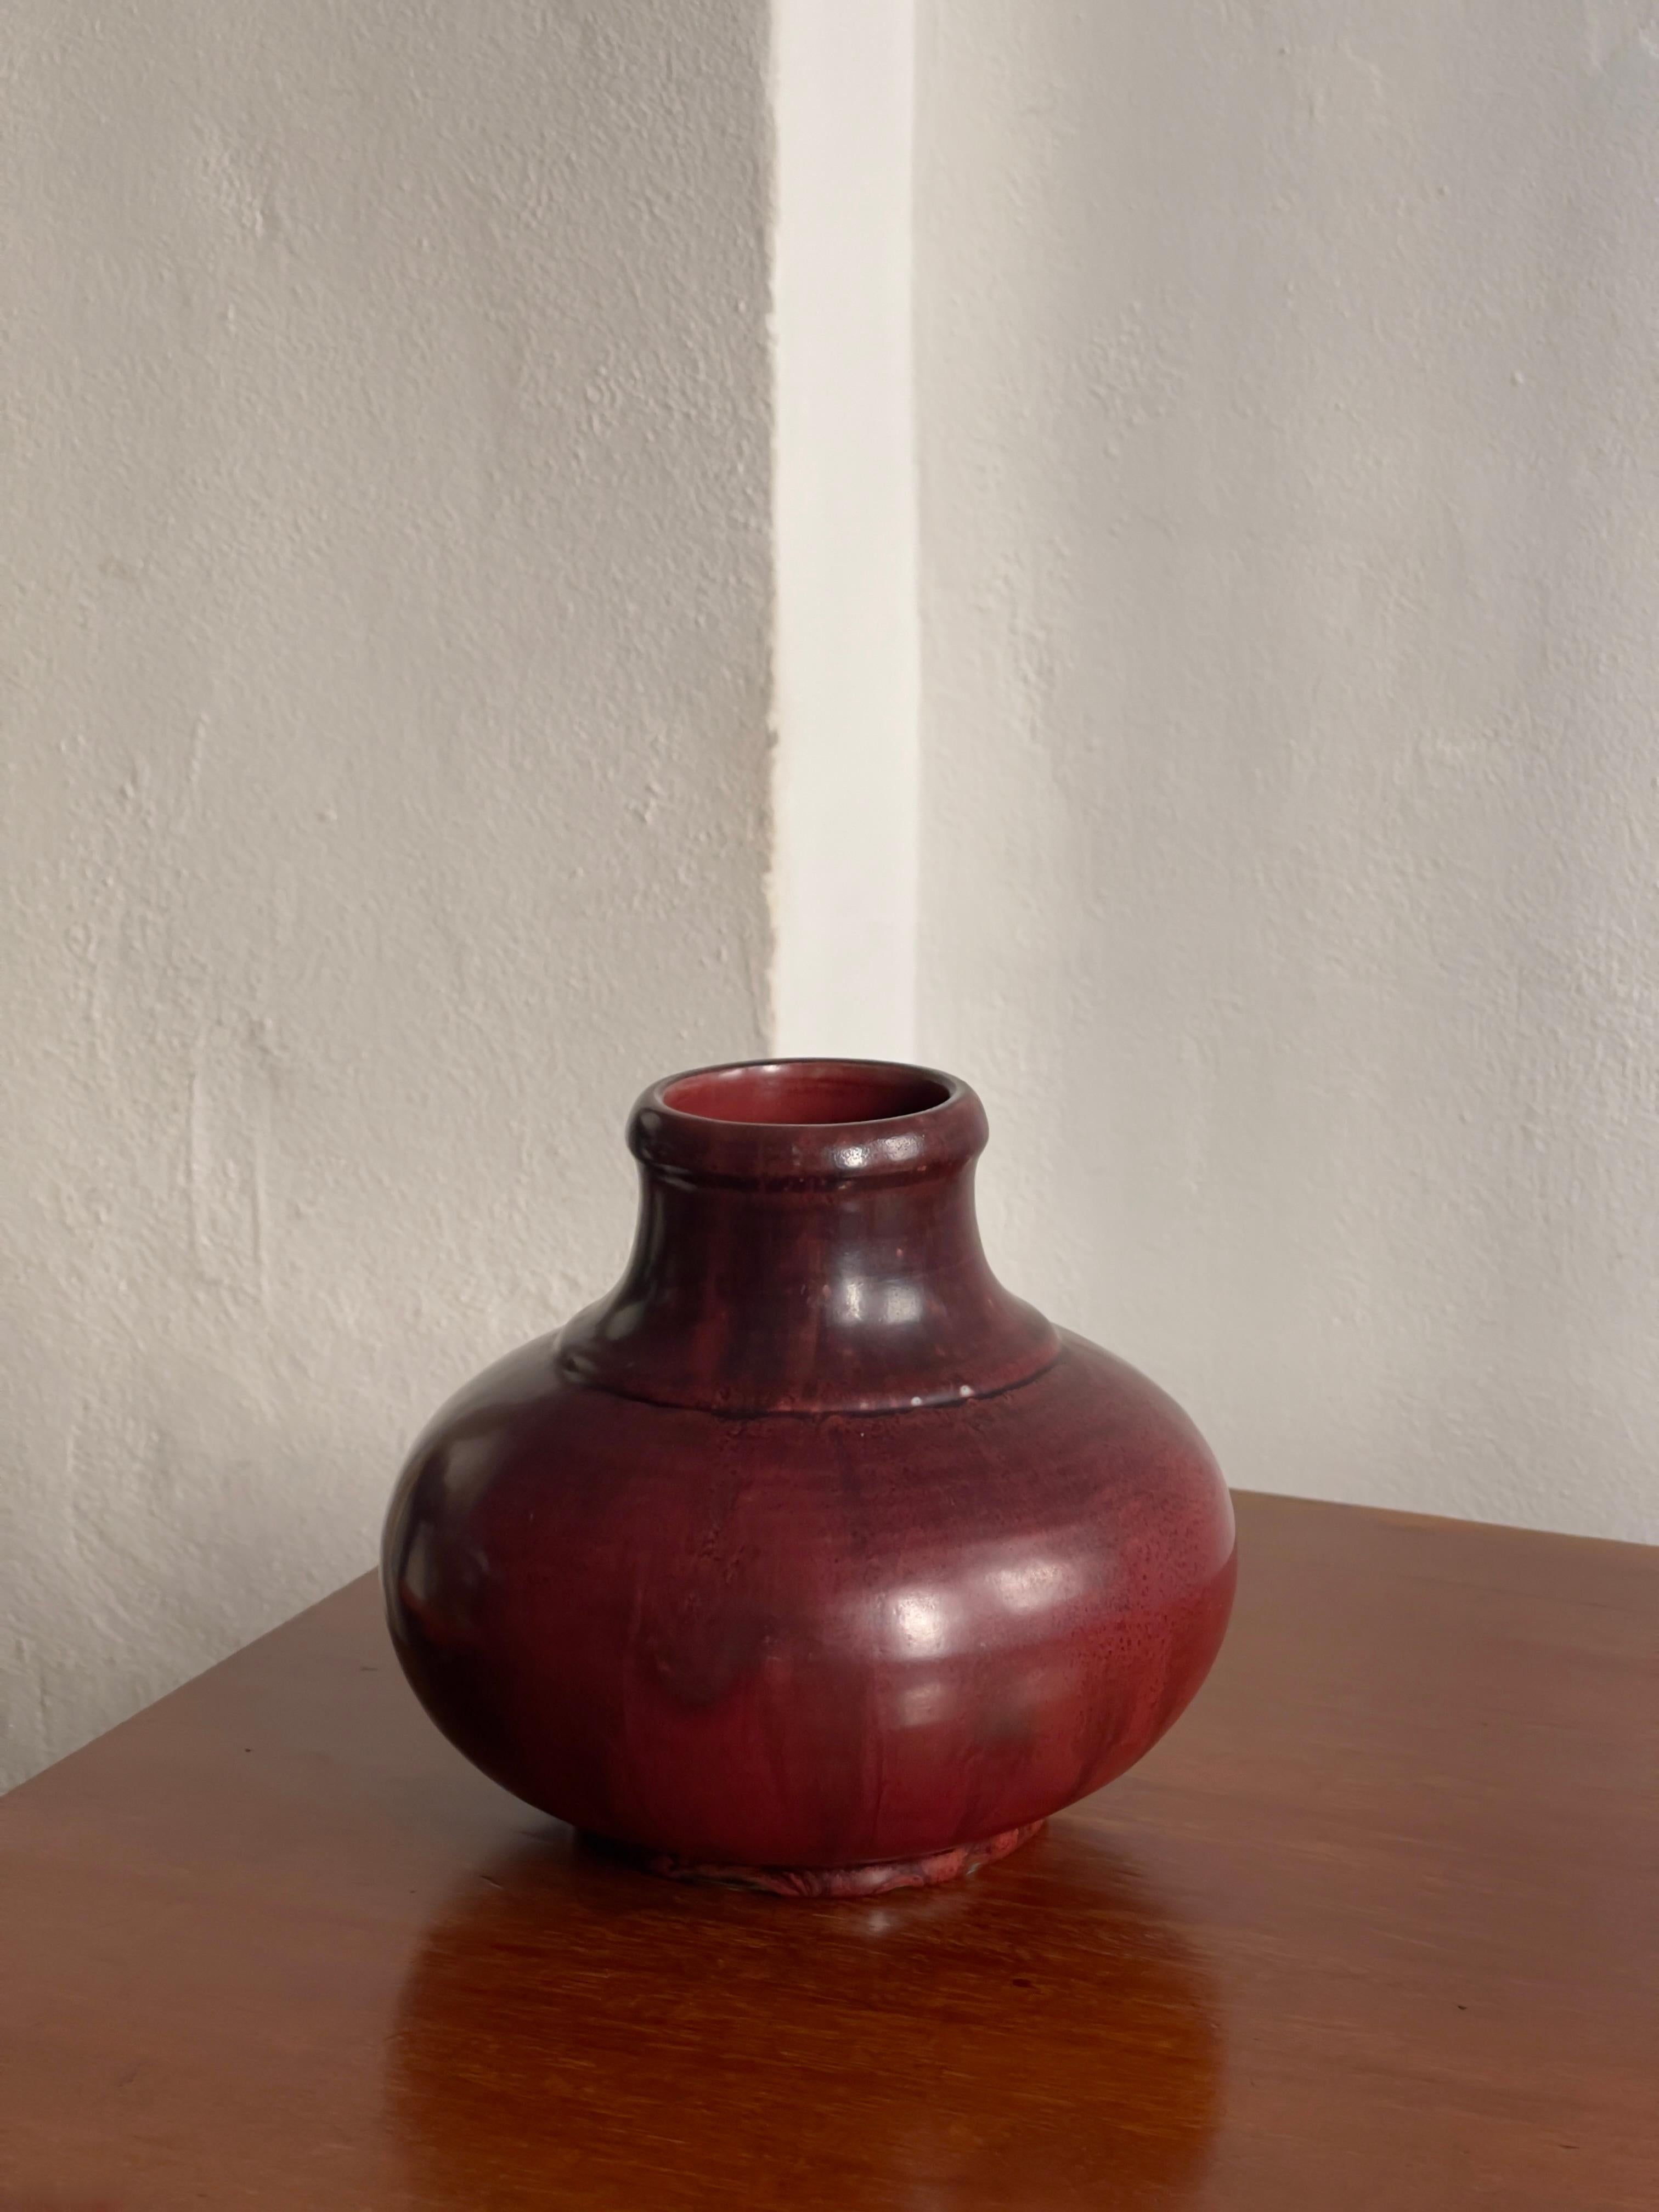 1935 Oxblood Red Vase by Ceramicist Carl Halier for Royal Copenhagen For Sale 2